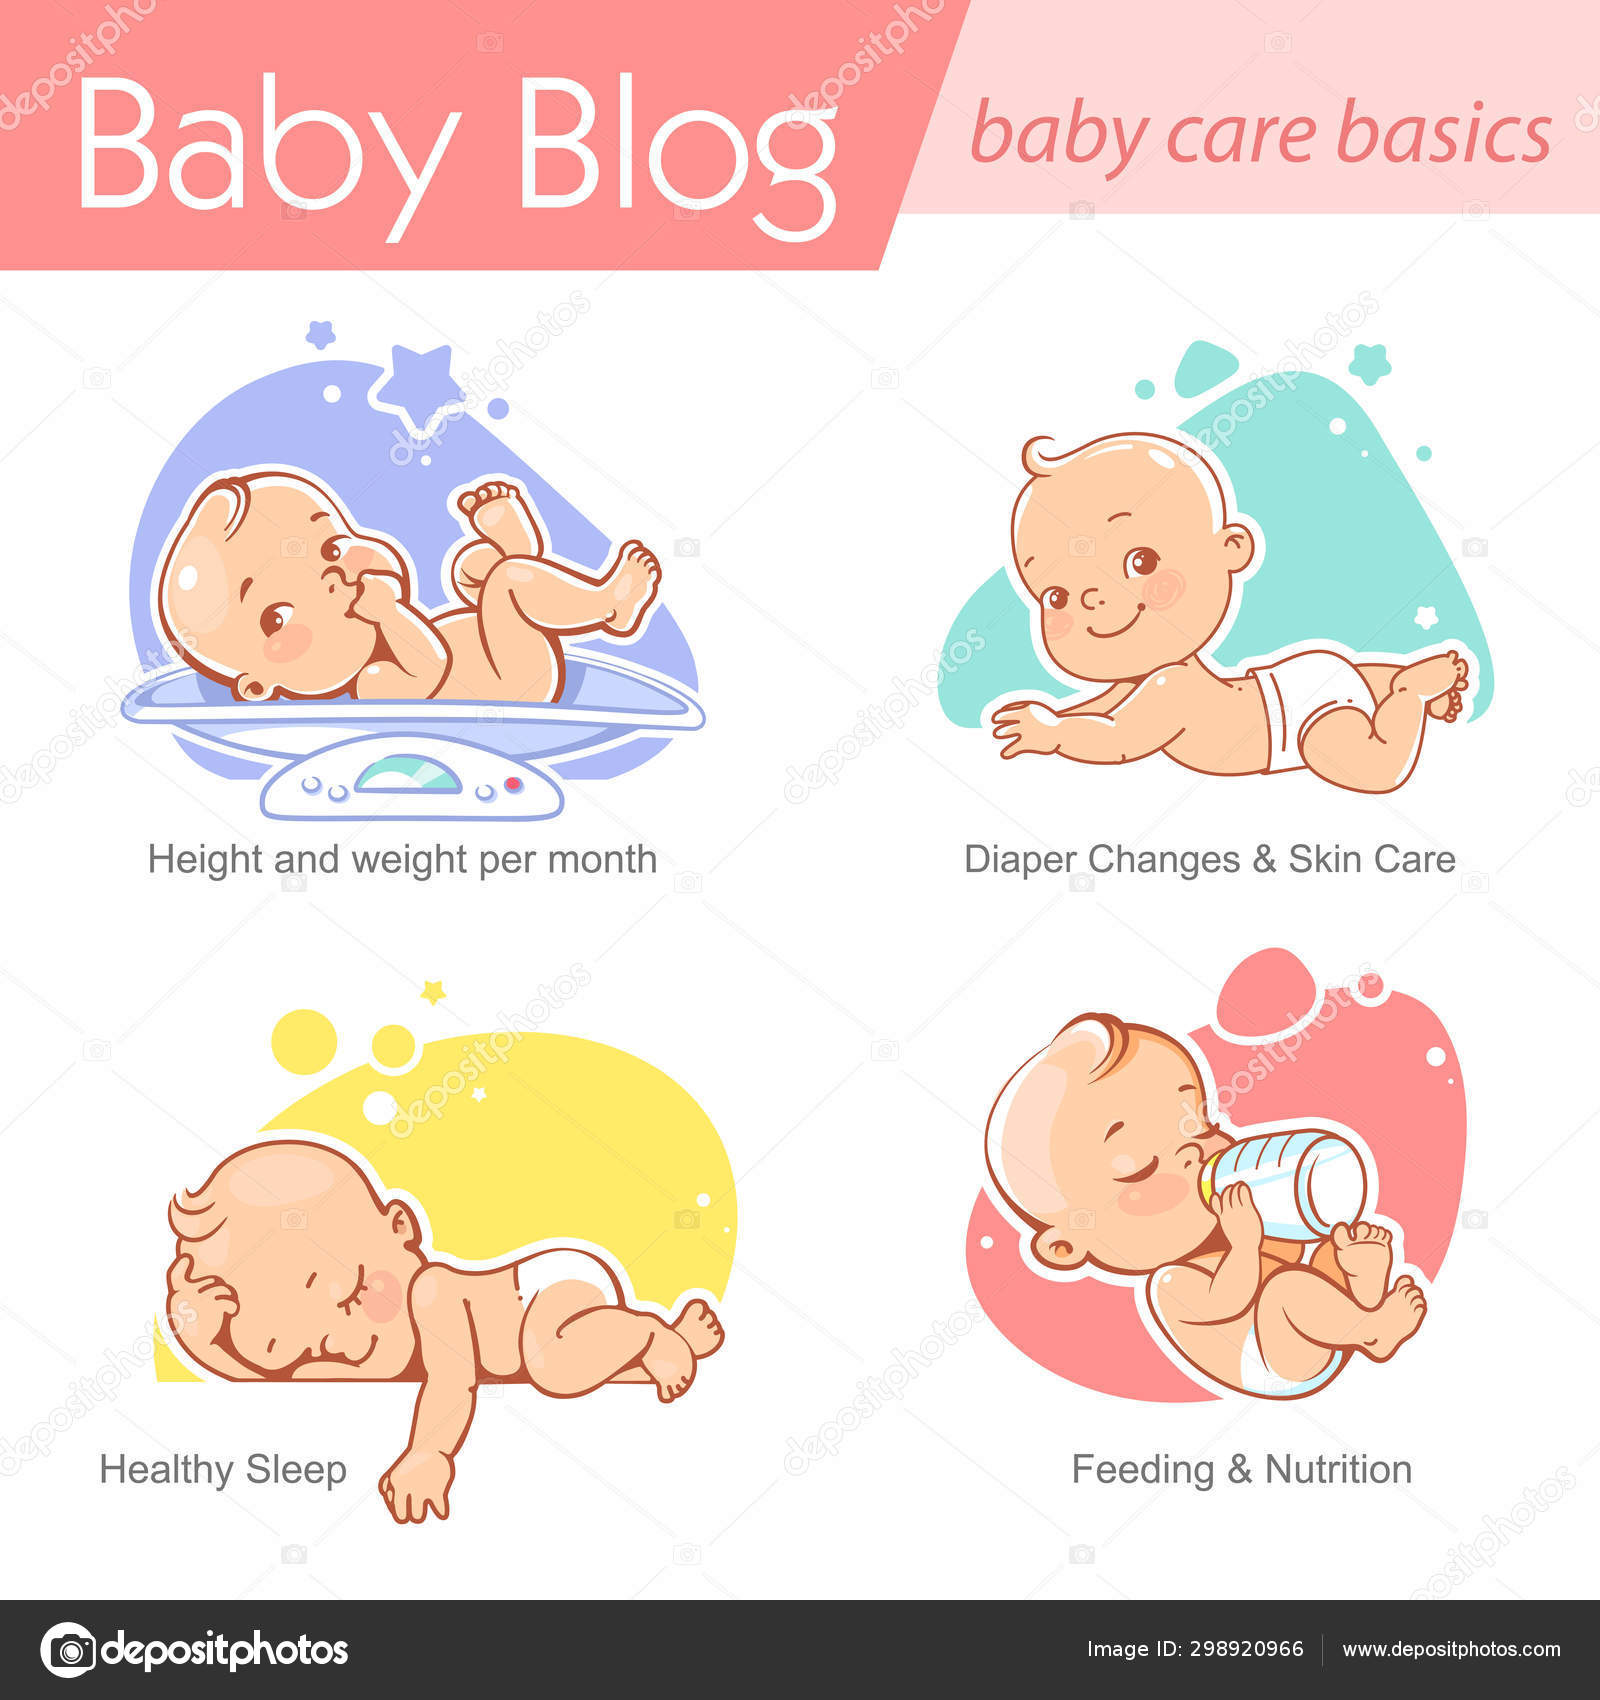 https://st4.depositphotos.com/6027682/29892/v/1600/depositphotos_298920966-stock-illustration-set-of-baby-illustration-first.jpg